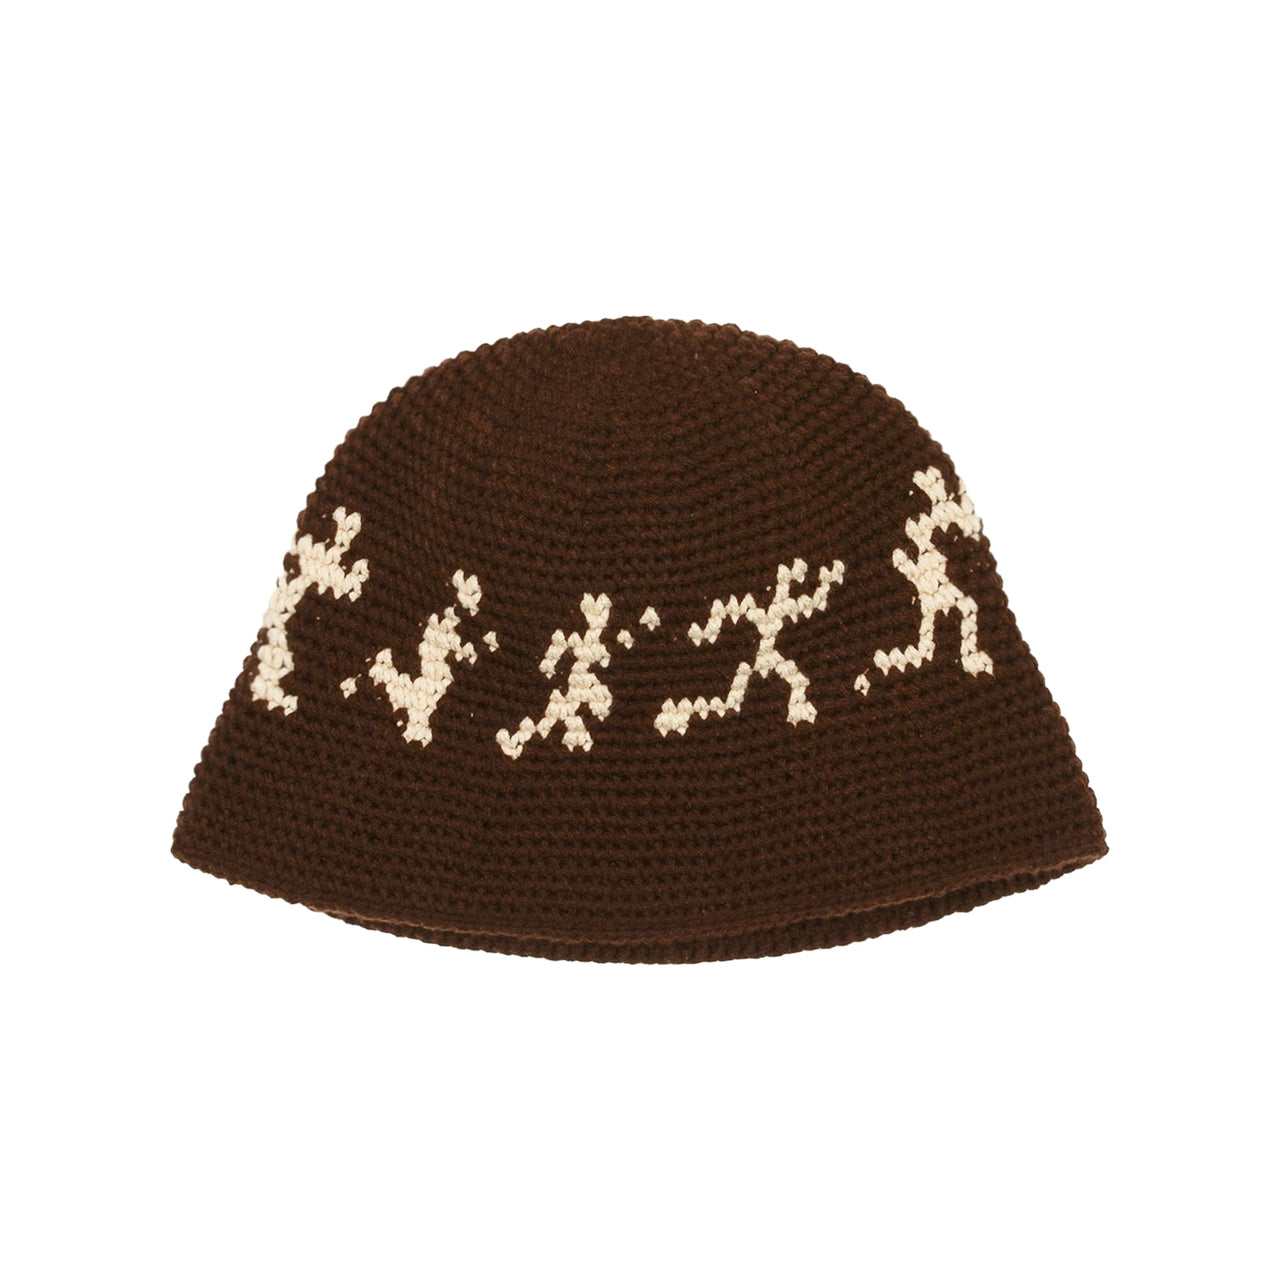 Running Guys Crochet Hat [Brown]